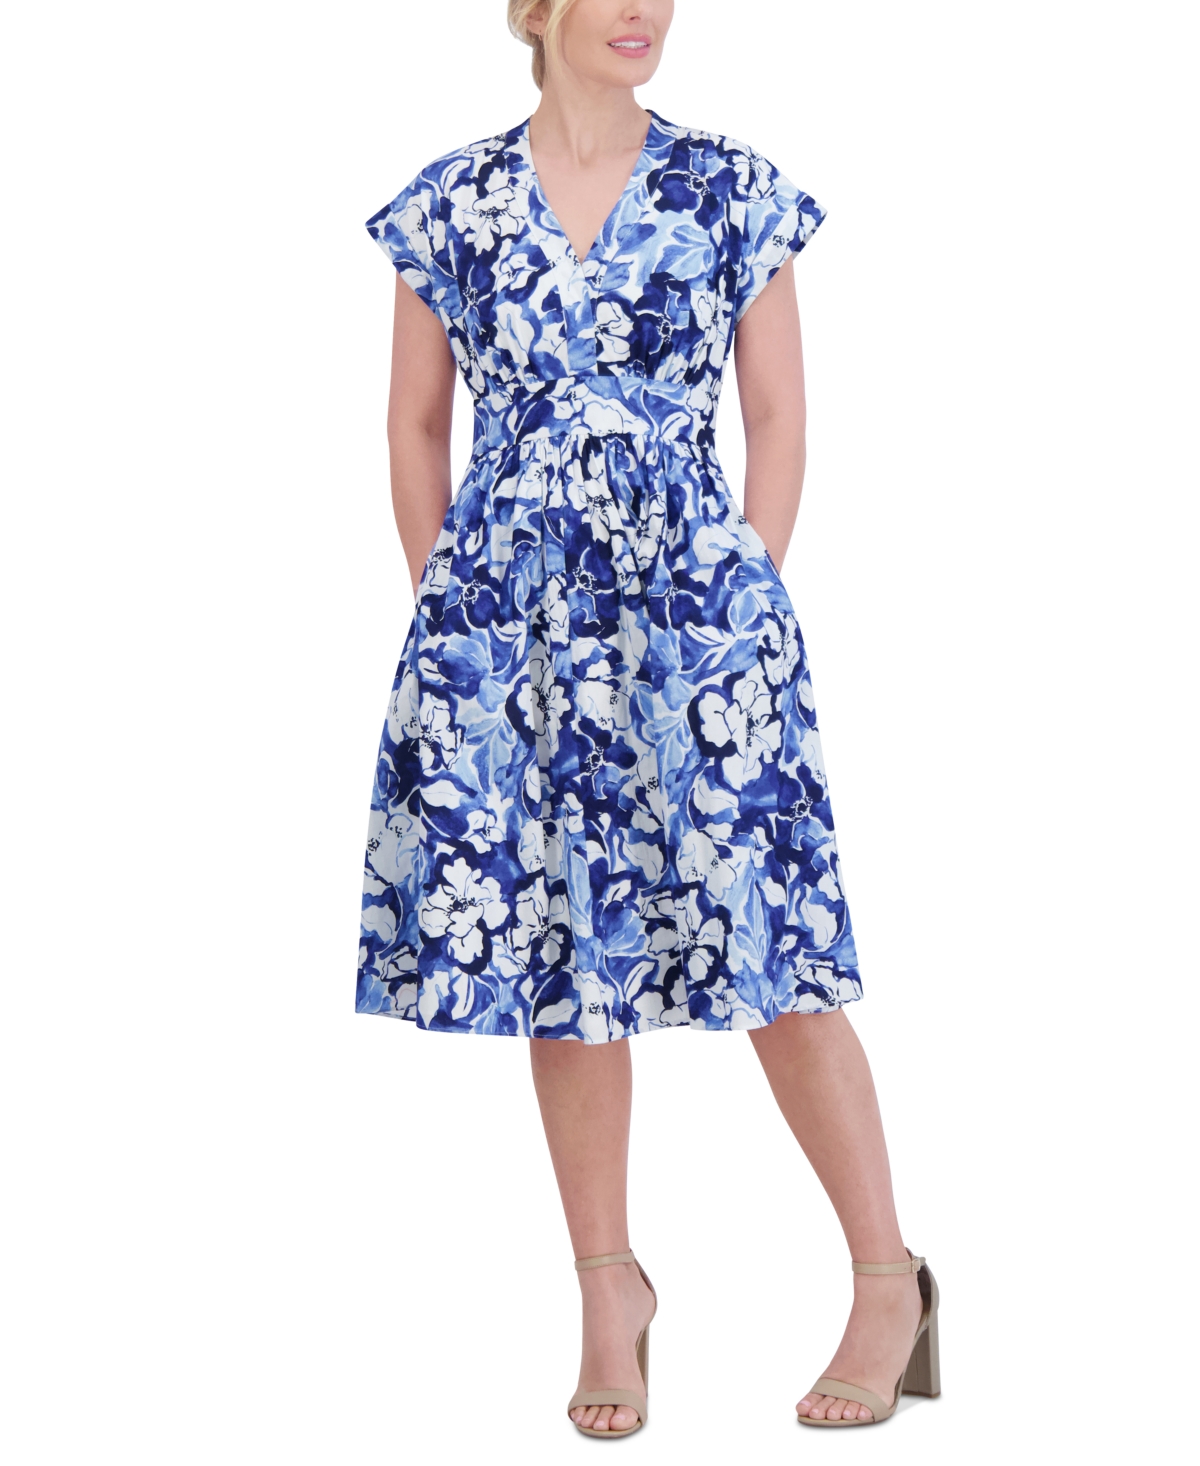 Women's Floral-Print Fit & Flare Dress - Blue Multi